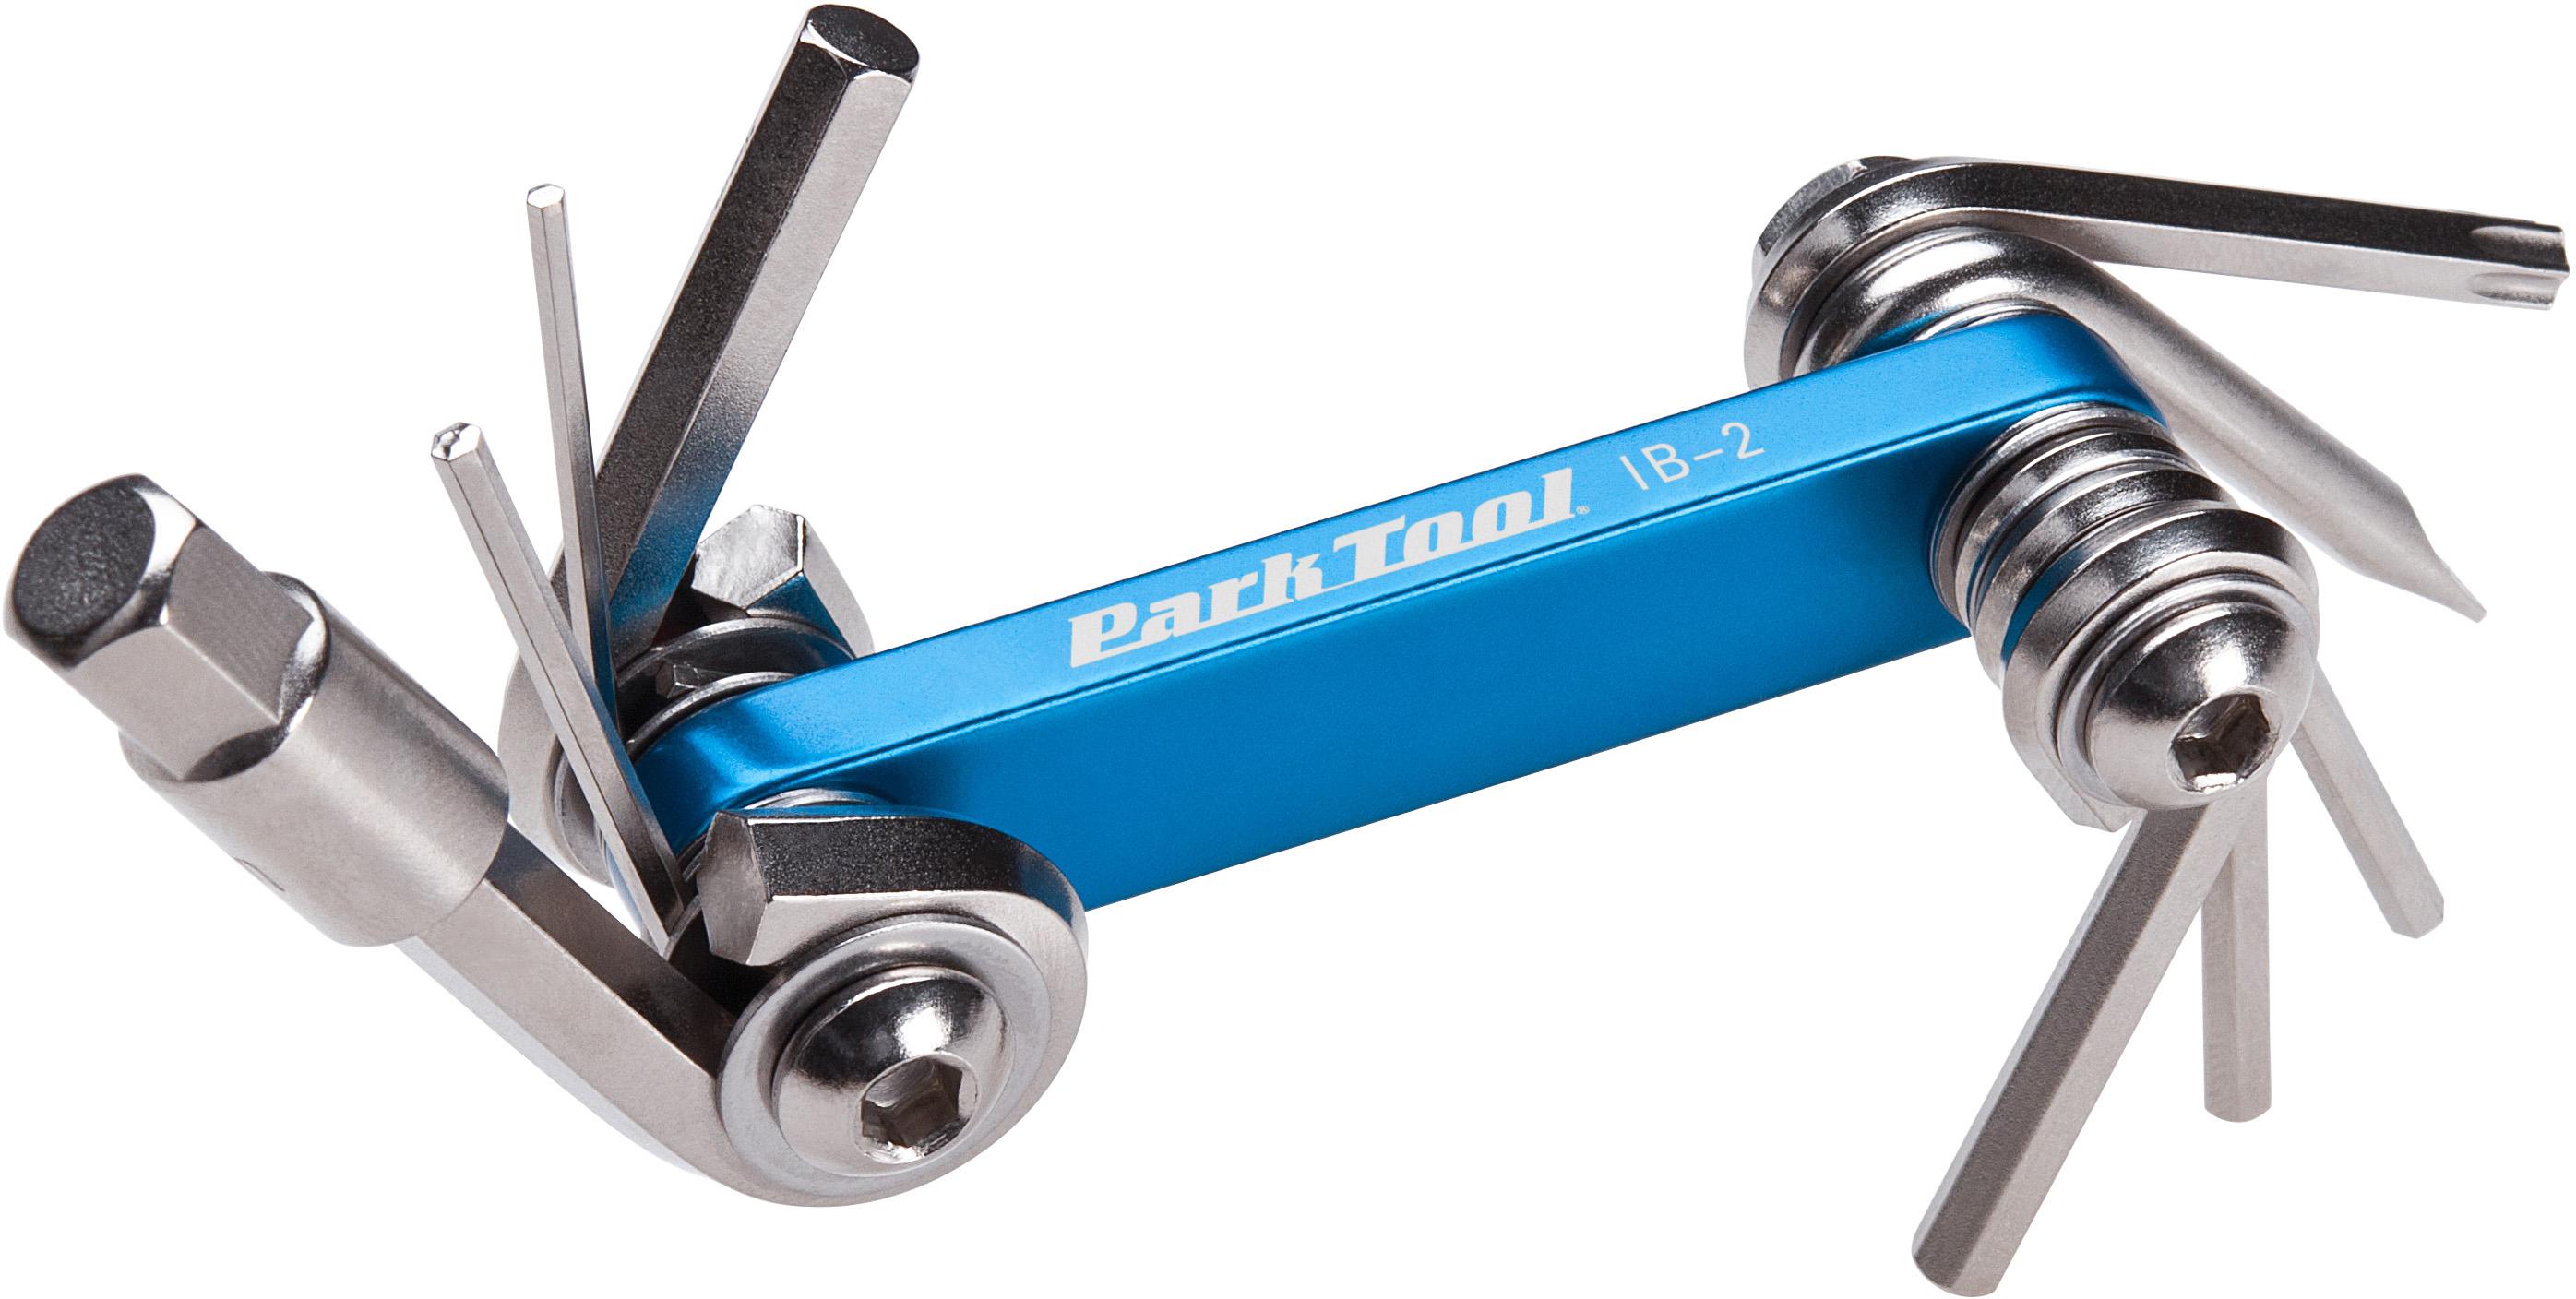 Park Tool I-beam 2 Mini Tool Ib2 - Blue/silver